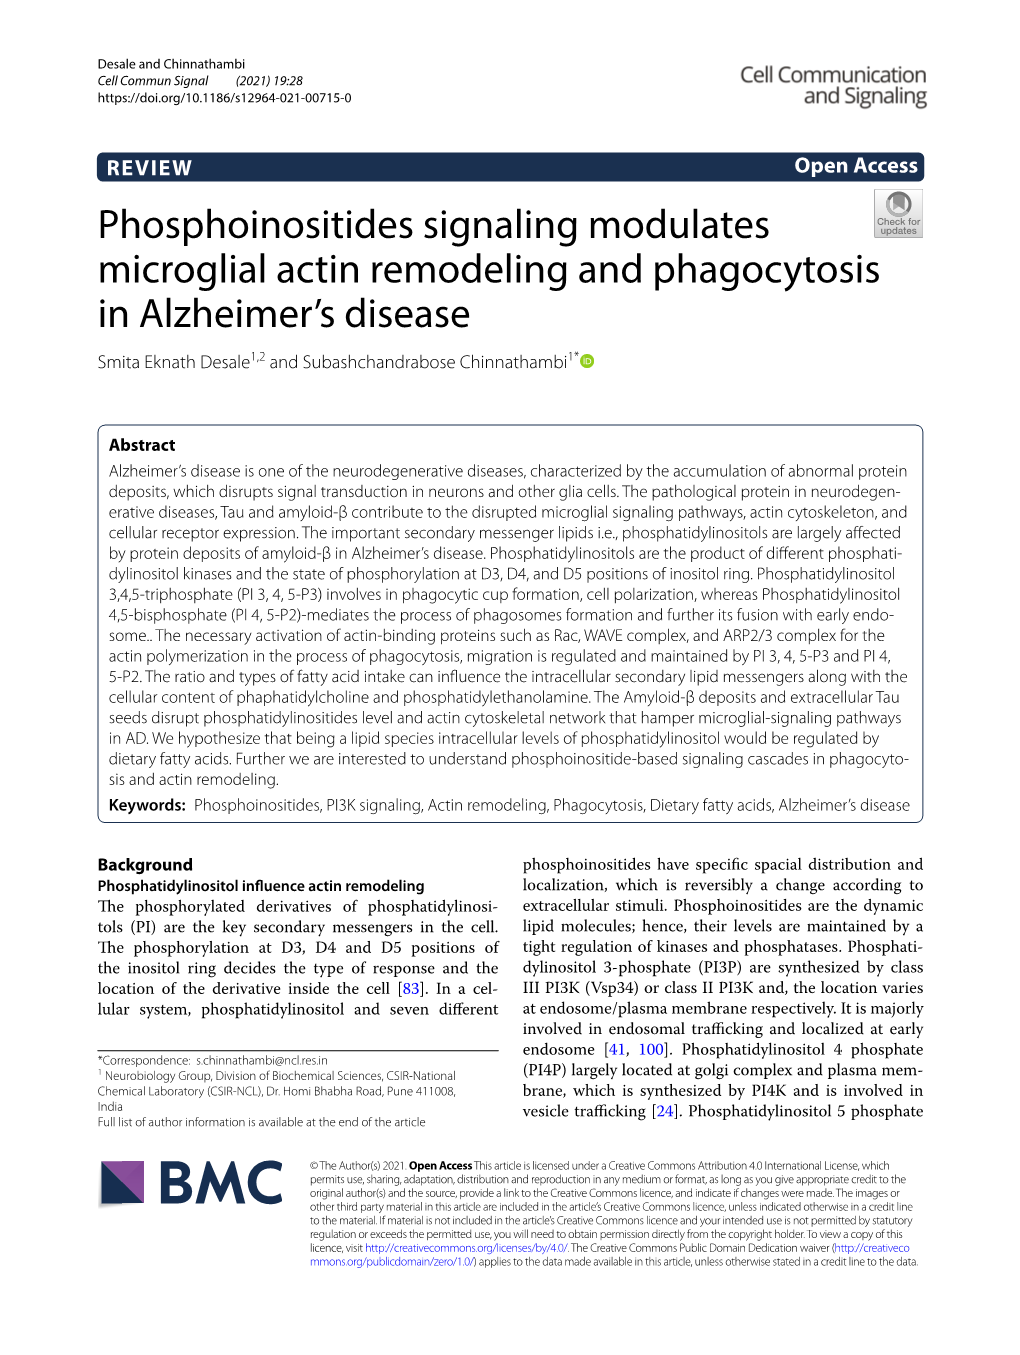 Phosphoinositides Signaling Modulates Microglial Actin Remodeling and Phagocytosis in Alzheimer’S Disease Smita Eknath Desale1,2 and Subashchandrabose Chinnathambi1*